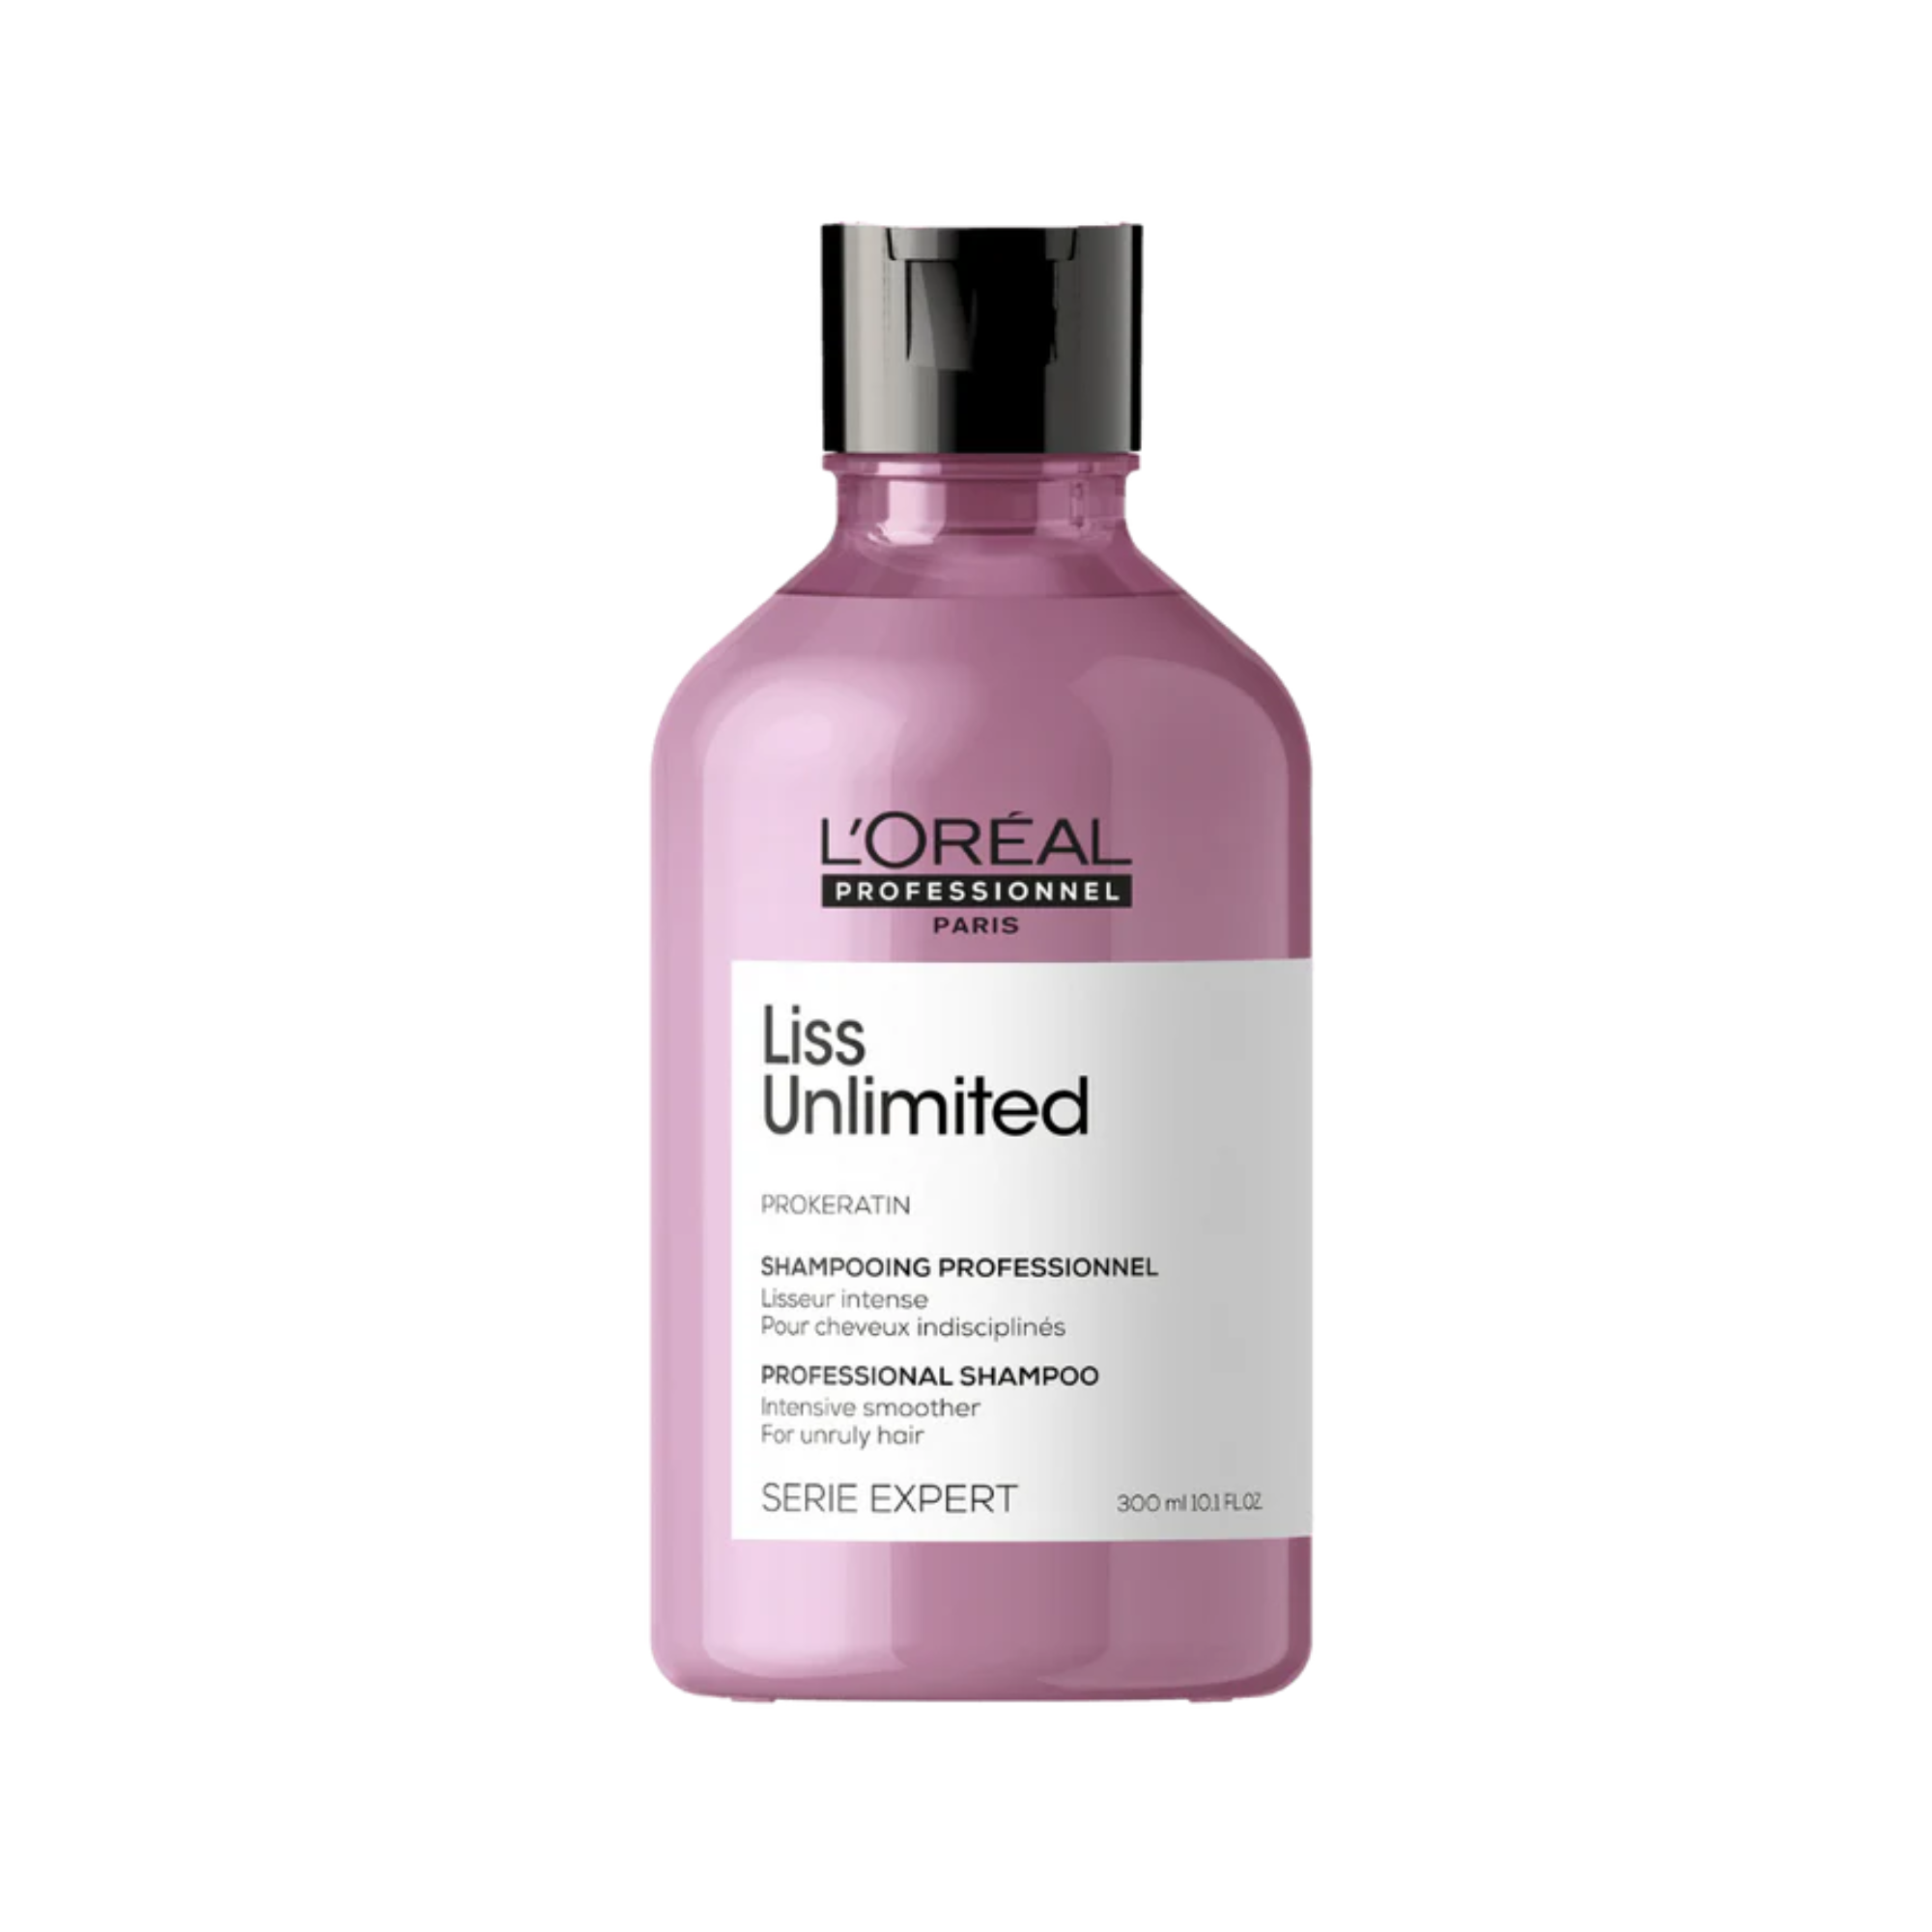 Shampoo L'Oreal Liss Unlimited Prokeratin (300 ML)